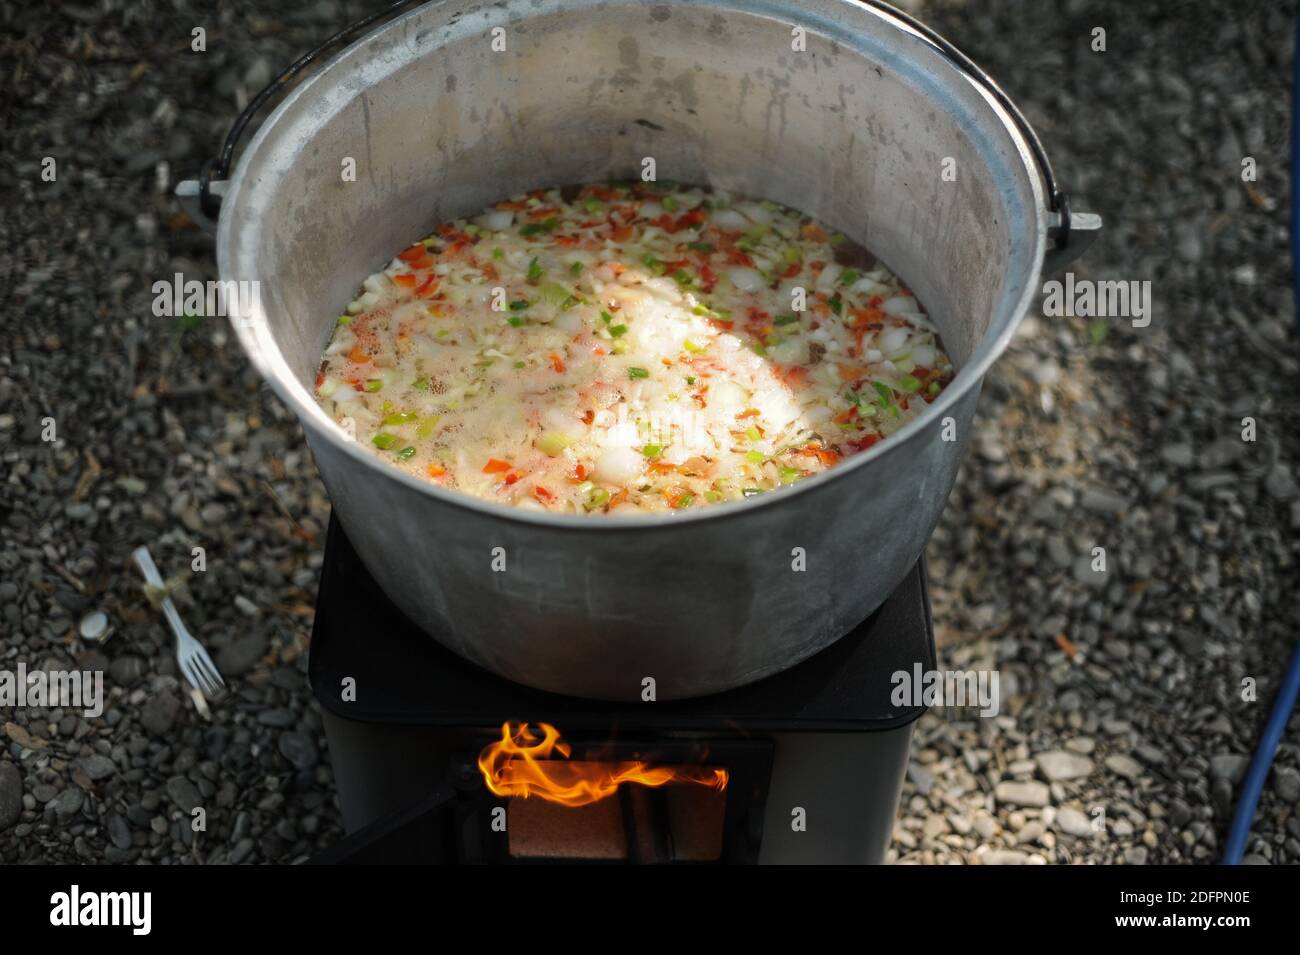 https://c8.alamy.com/comp/2DFPN0E/shallow-depth-of-field-selective-focus-image-with-a-traditional-danube-delta-fish-soup-in-a-big-iron-cast-cauldron-2DFPN0E.jpg